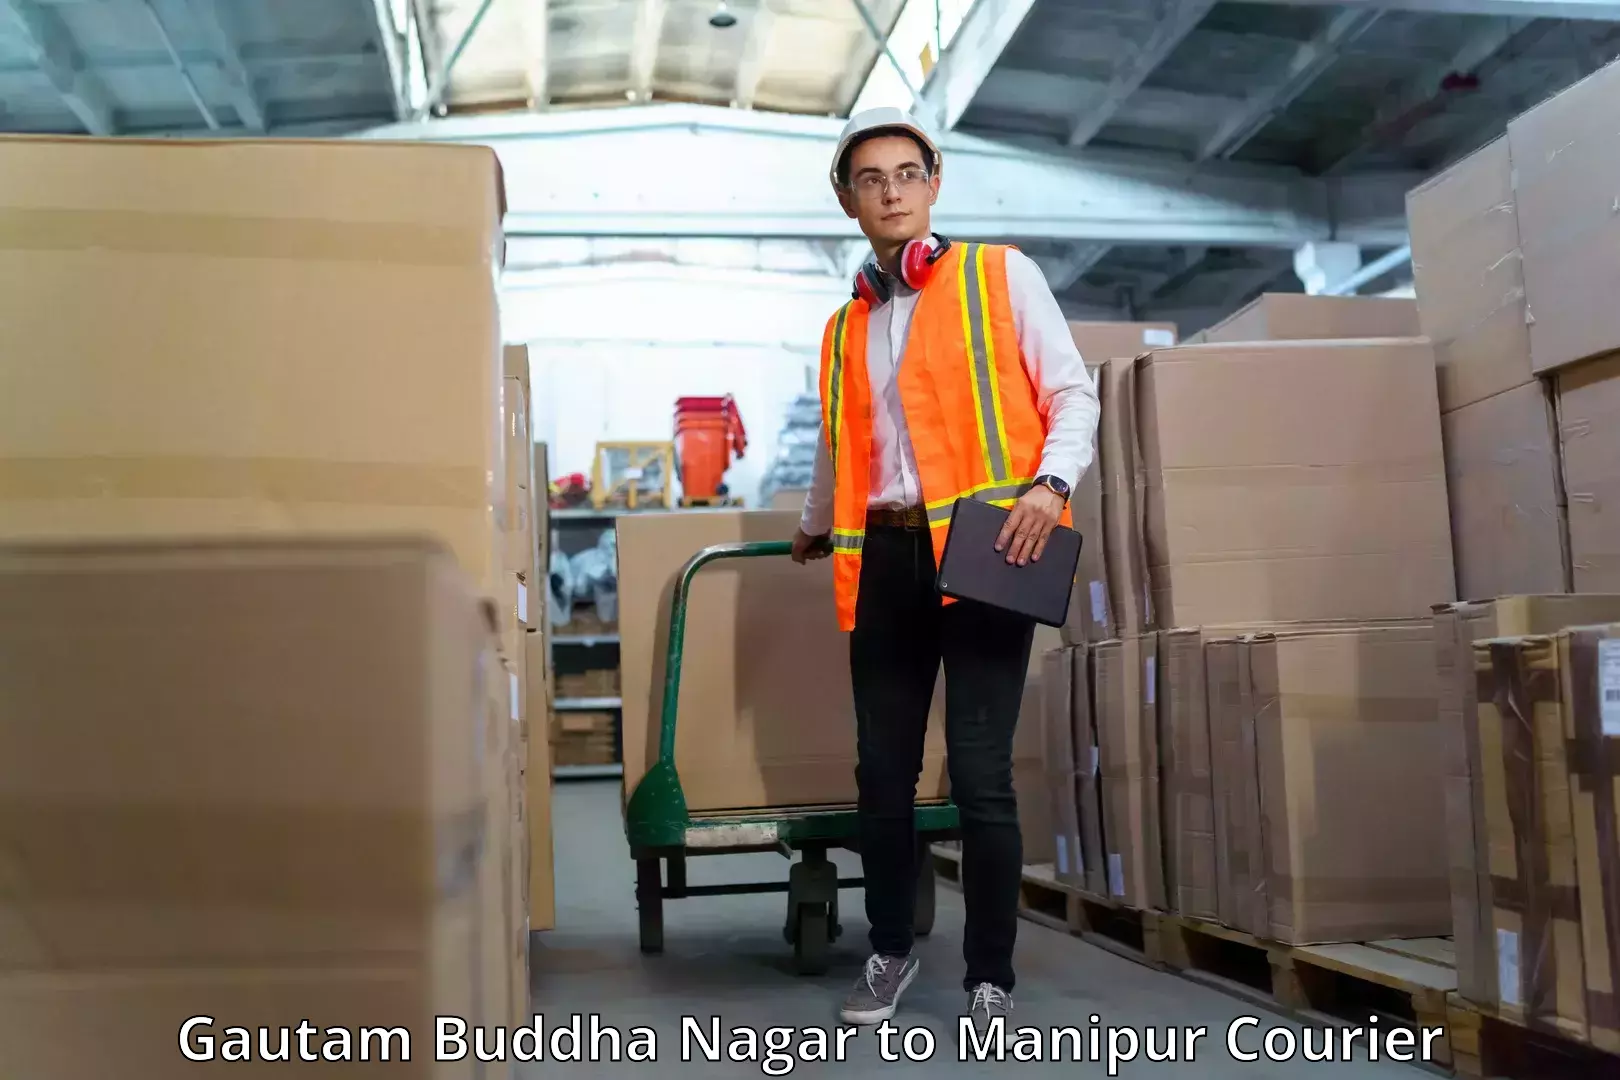 Cash on delivery service Gautam Buddha Nagar to Manipur